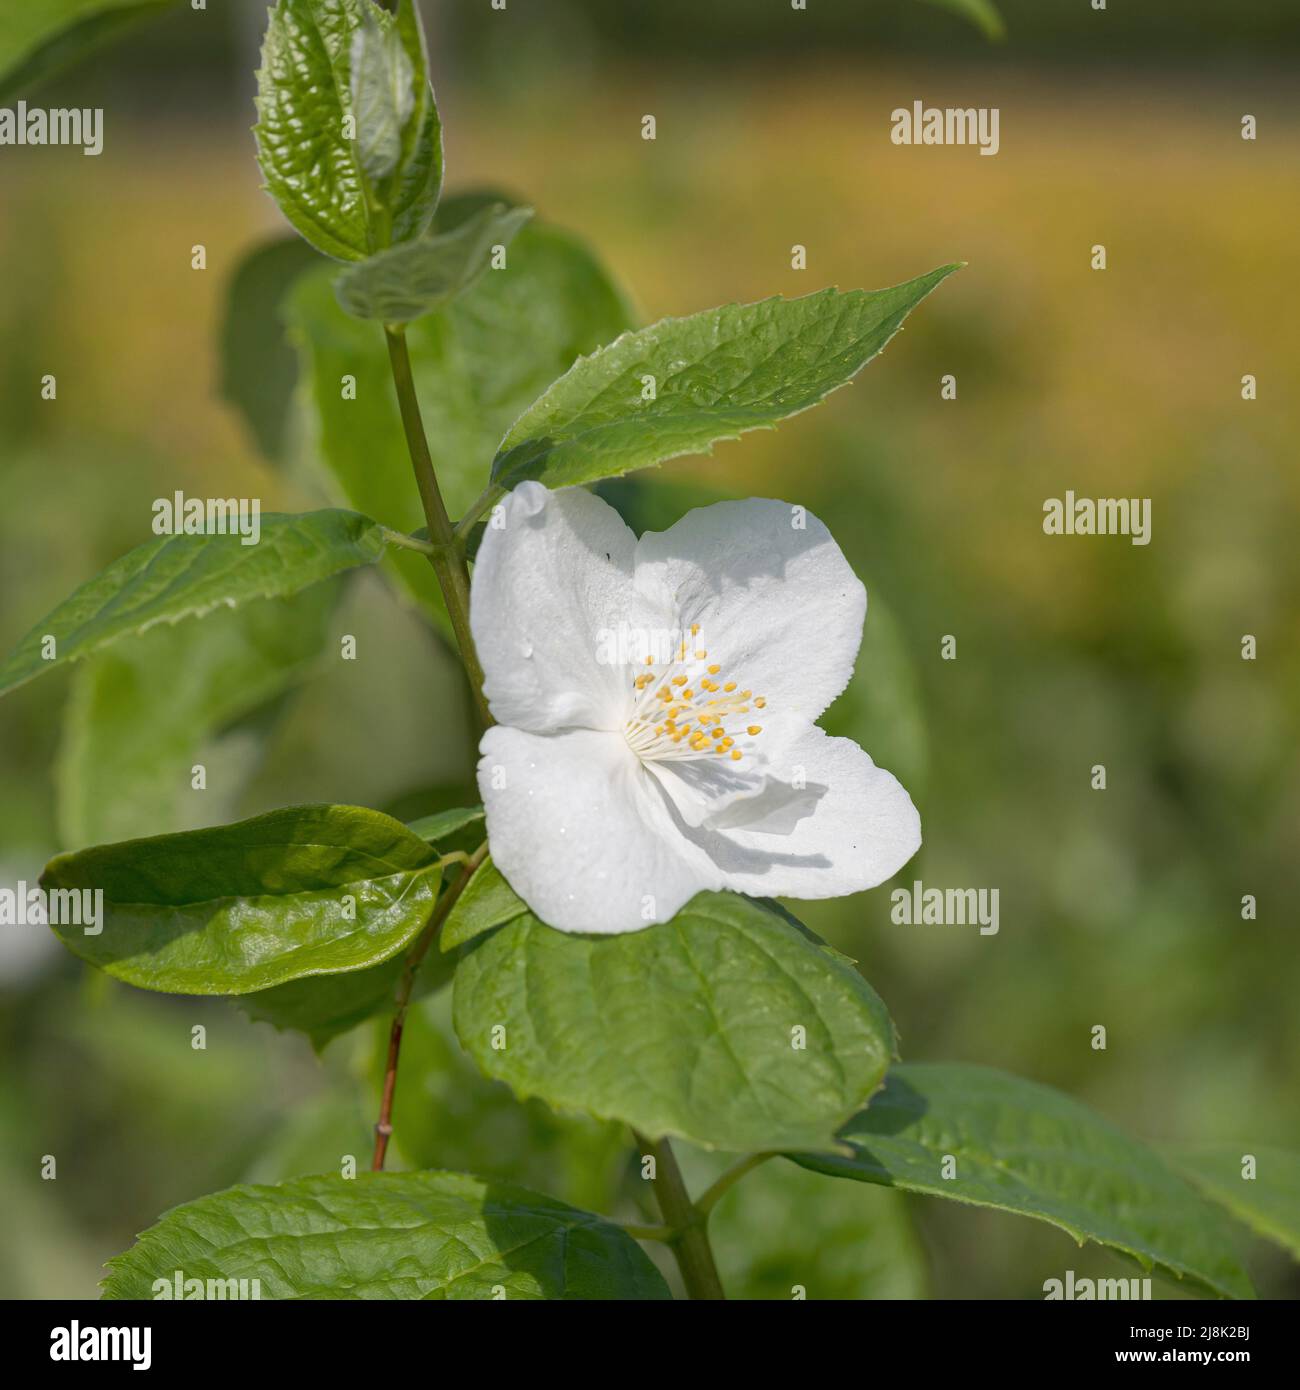 Gartenjasmin (Philadelphus 'Natchez', Philadelphus Natchez), fleur du cultivar Natchez, Bundesrepublik Deutschland Banque D'Images